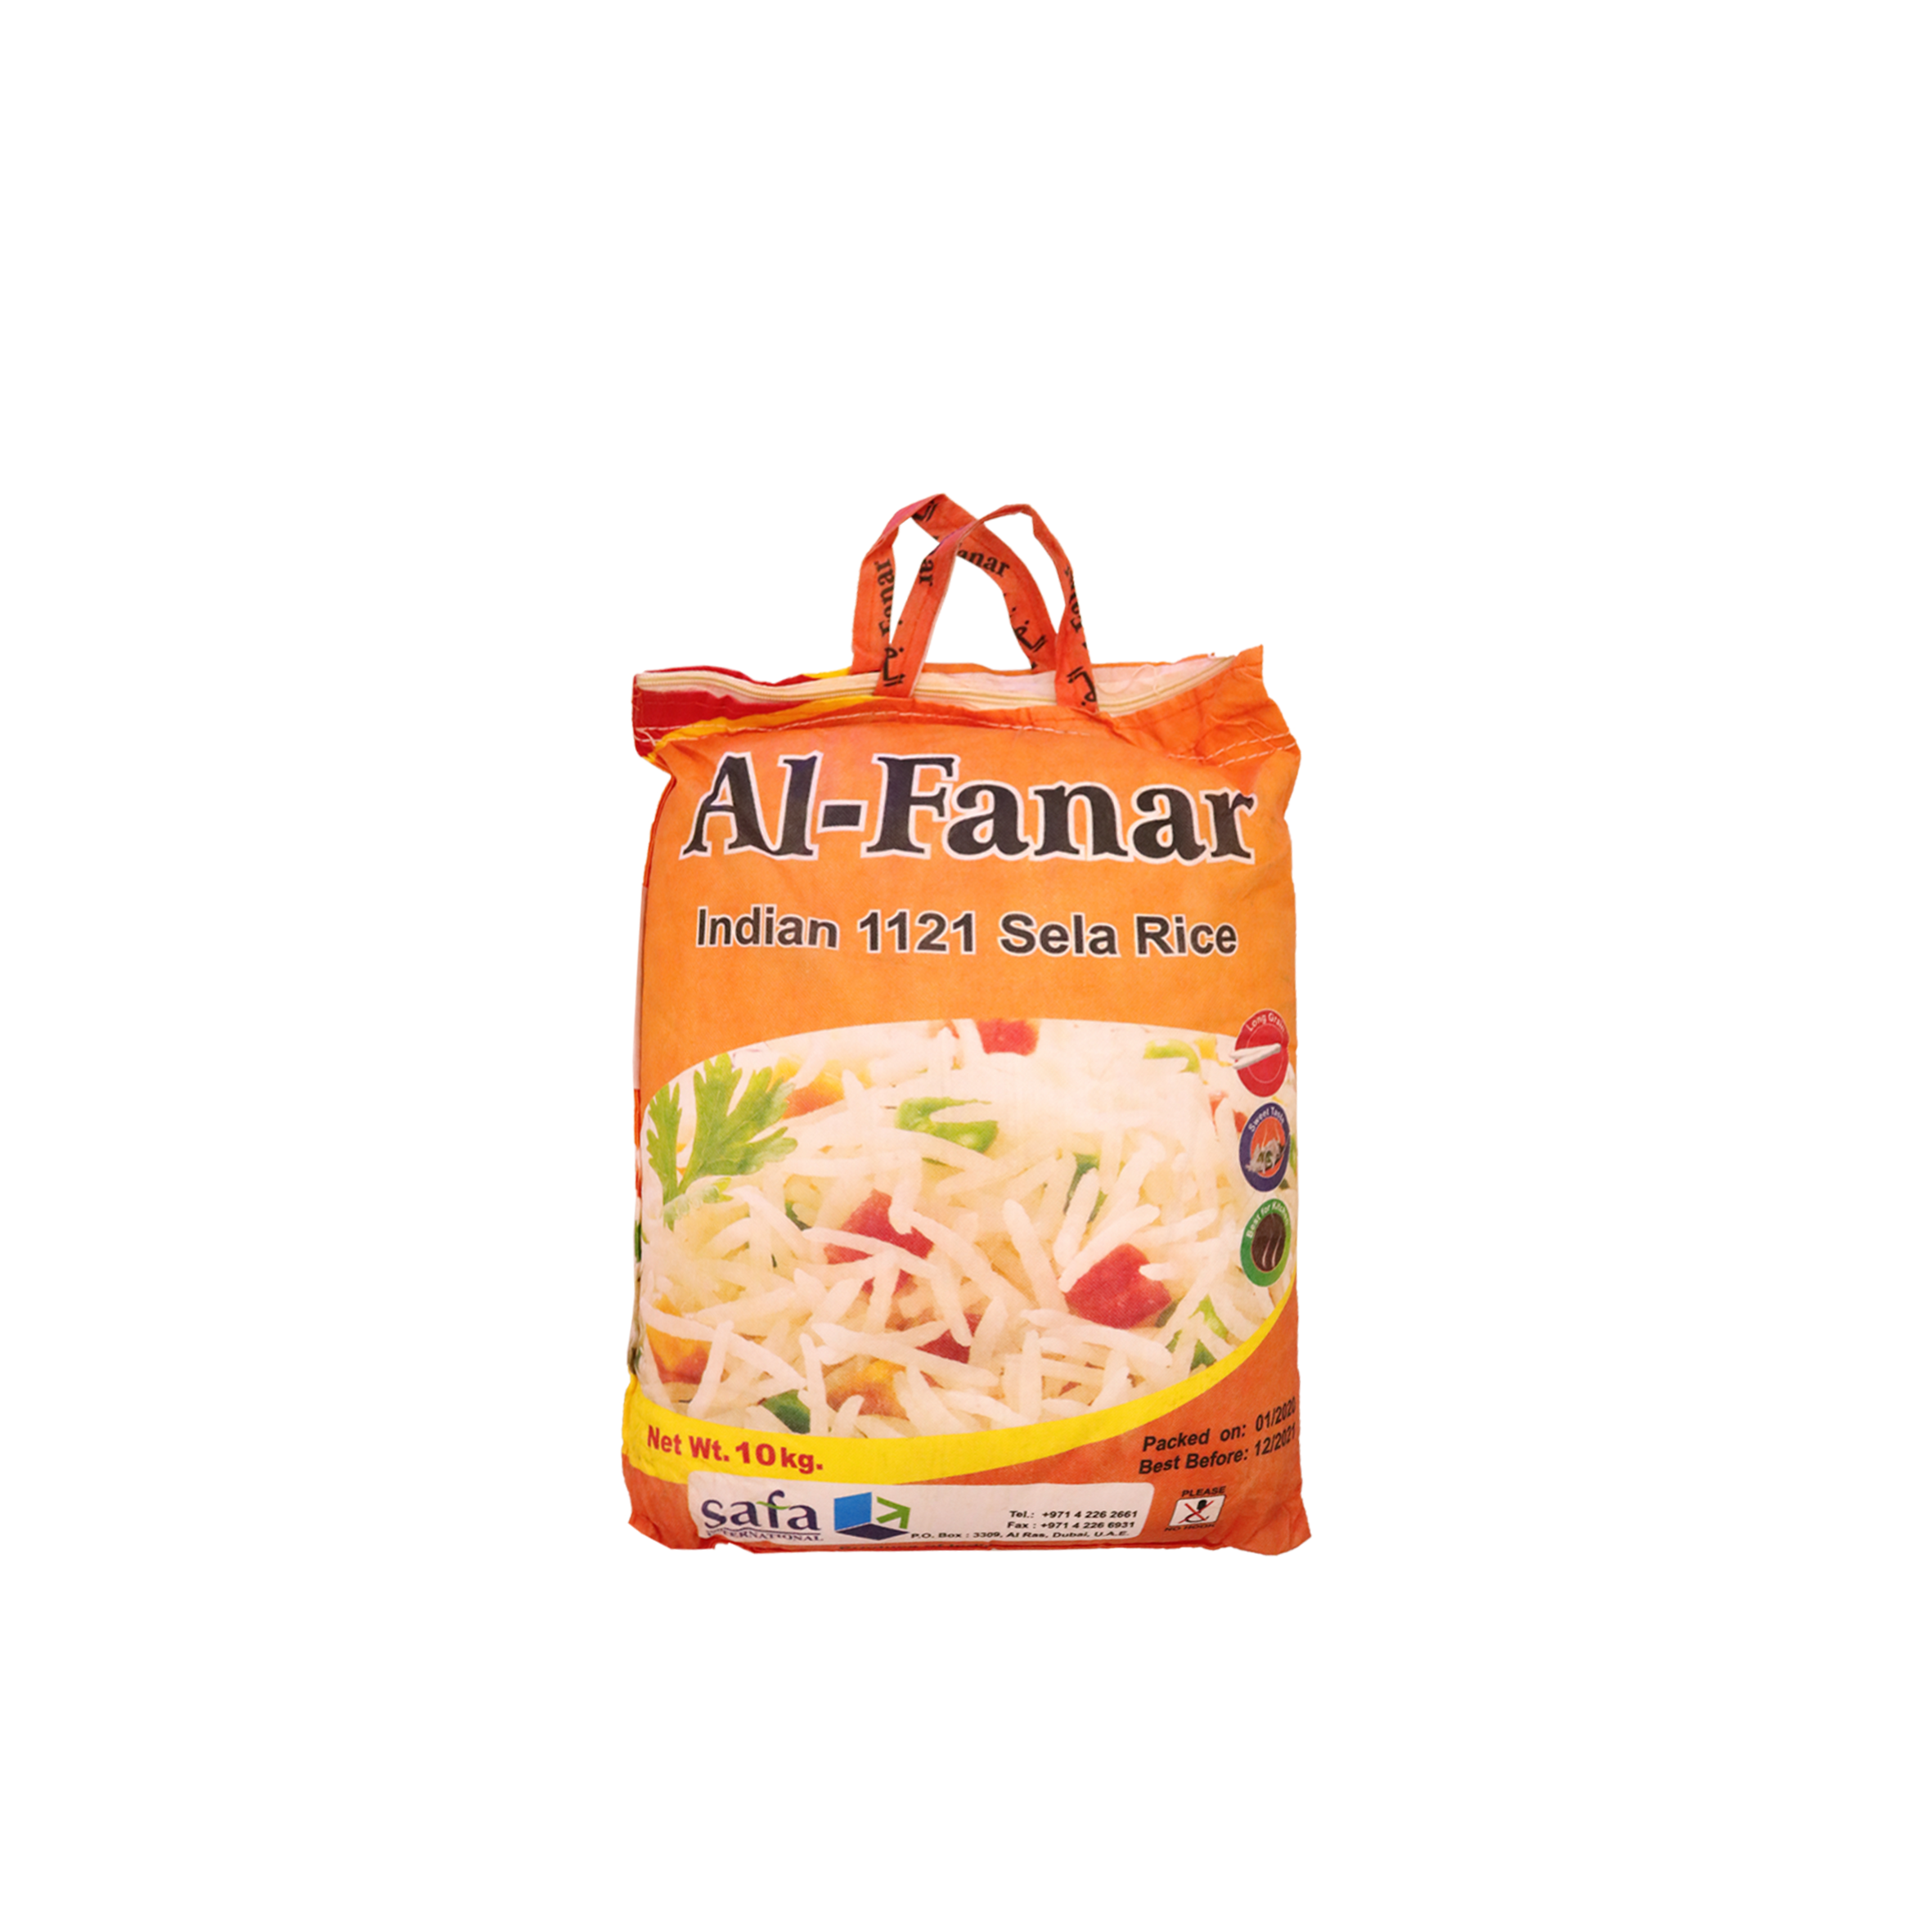 Al-fanar Indian 1121 Sela Rice 10Kg